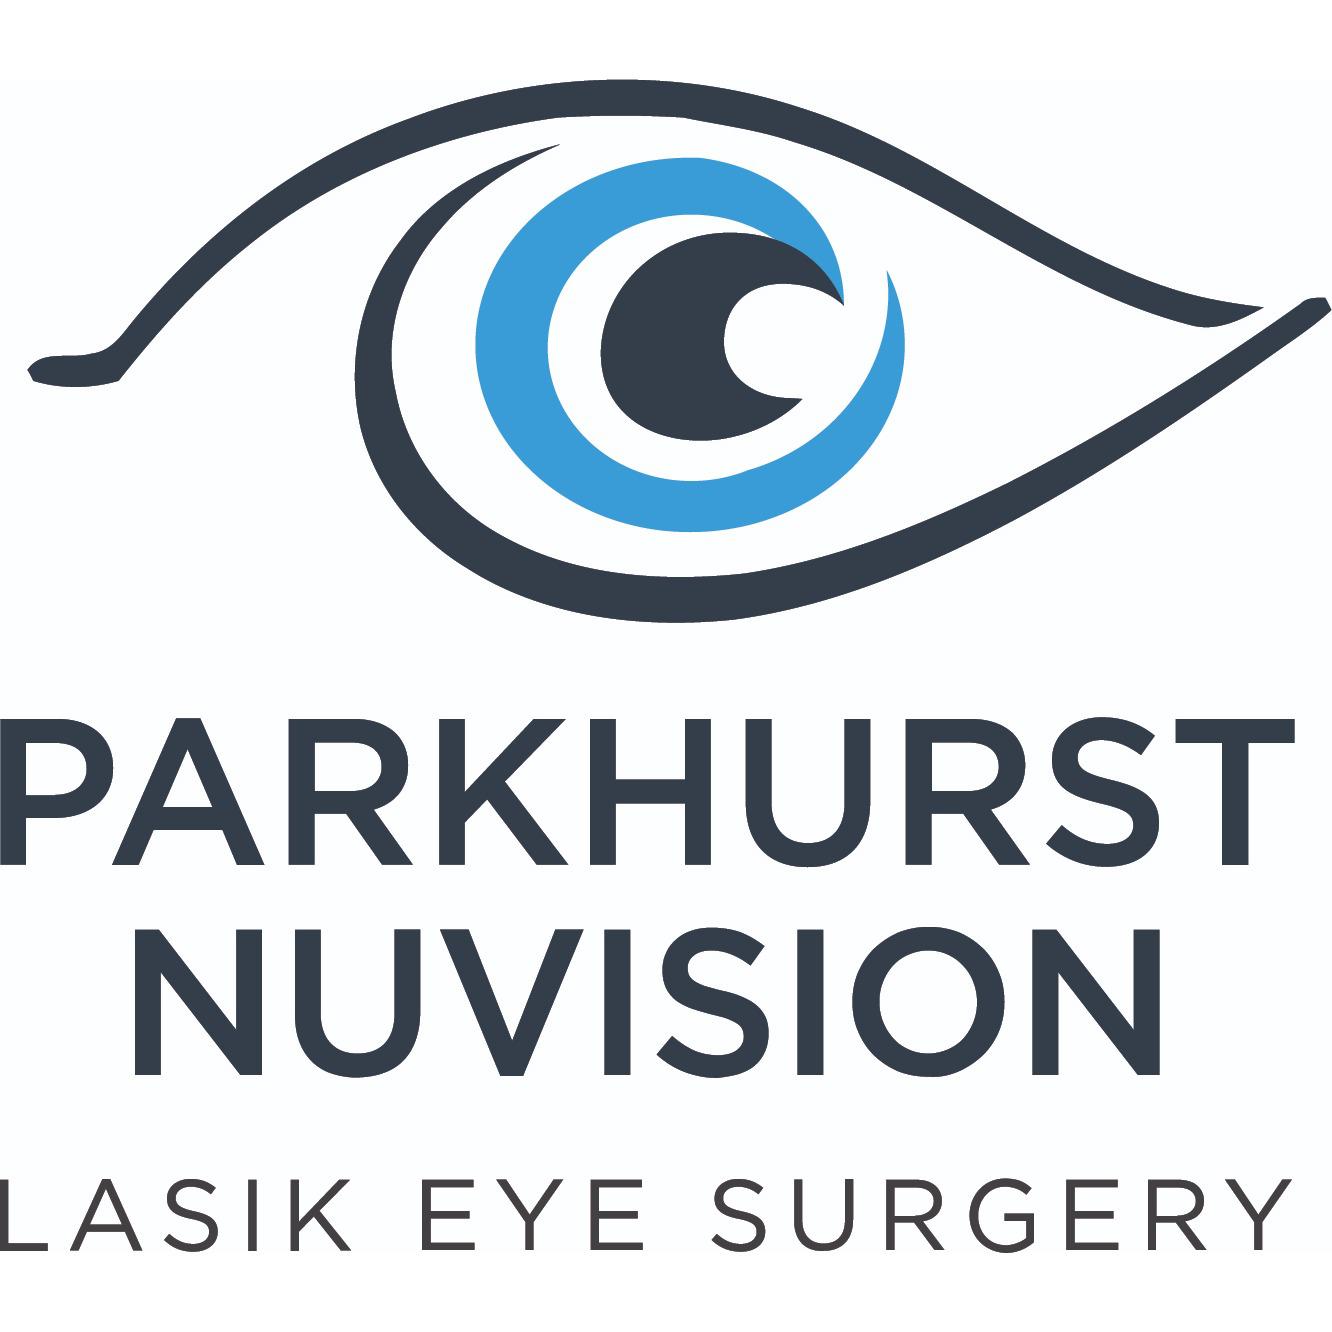 Parkhurst NuVision LASIK Eye Surgery - San Antonio, TX 78229 - (210)851-9587 | ShowMeLocal.com